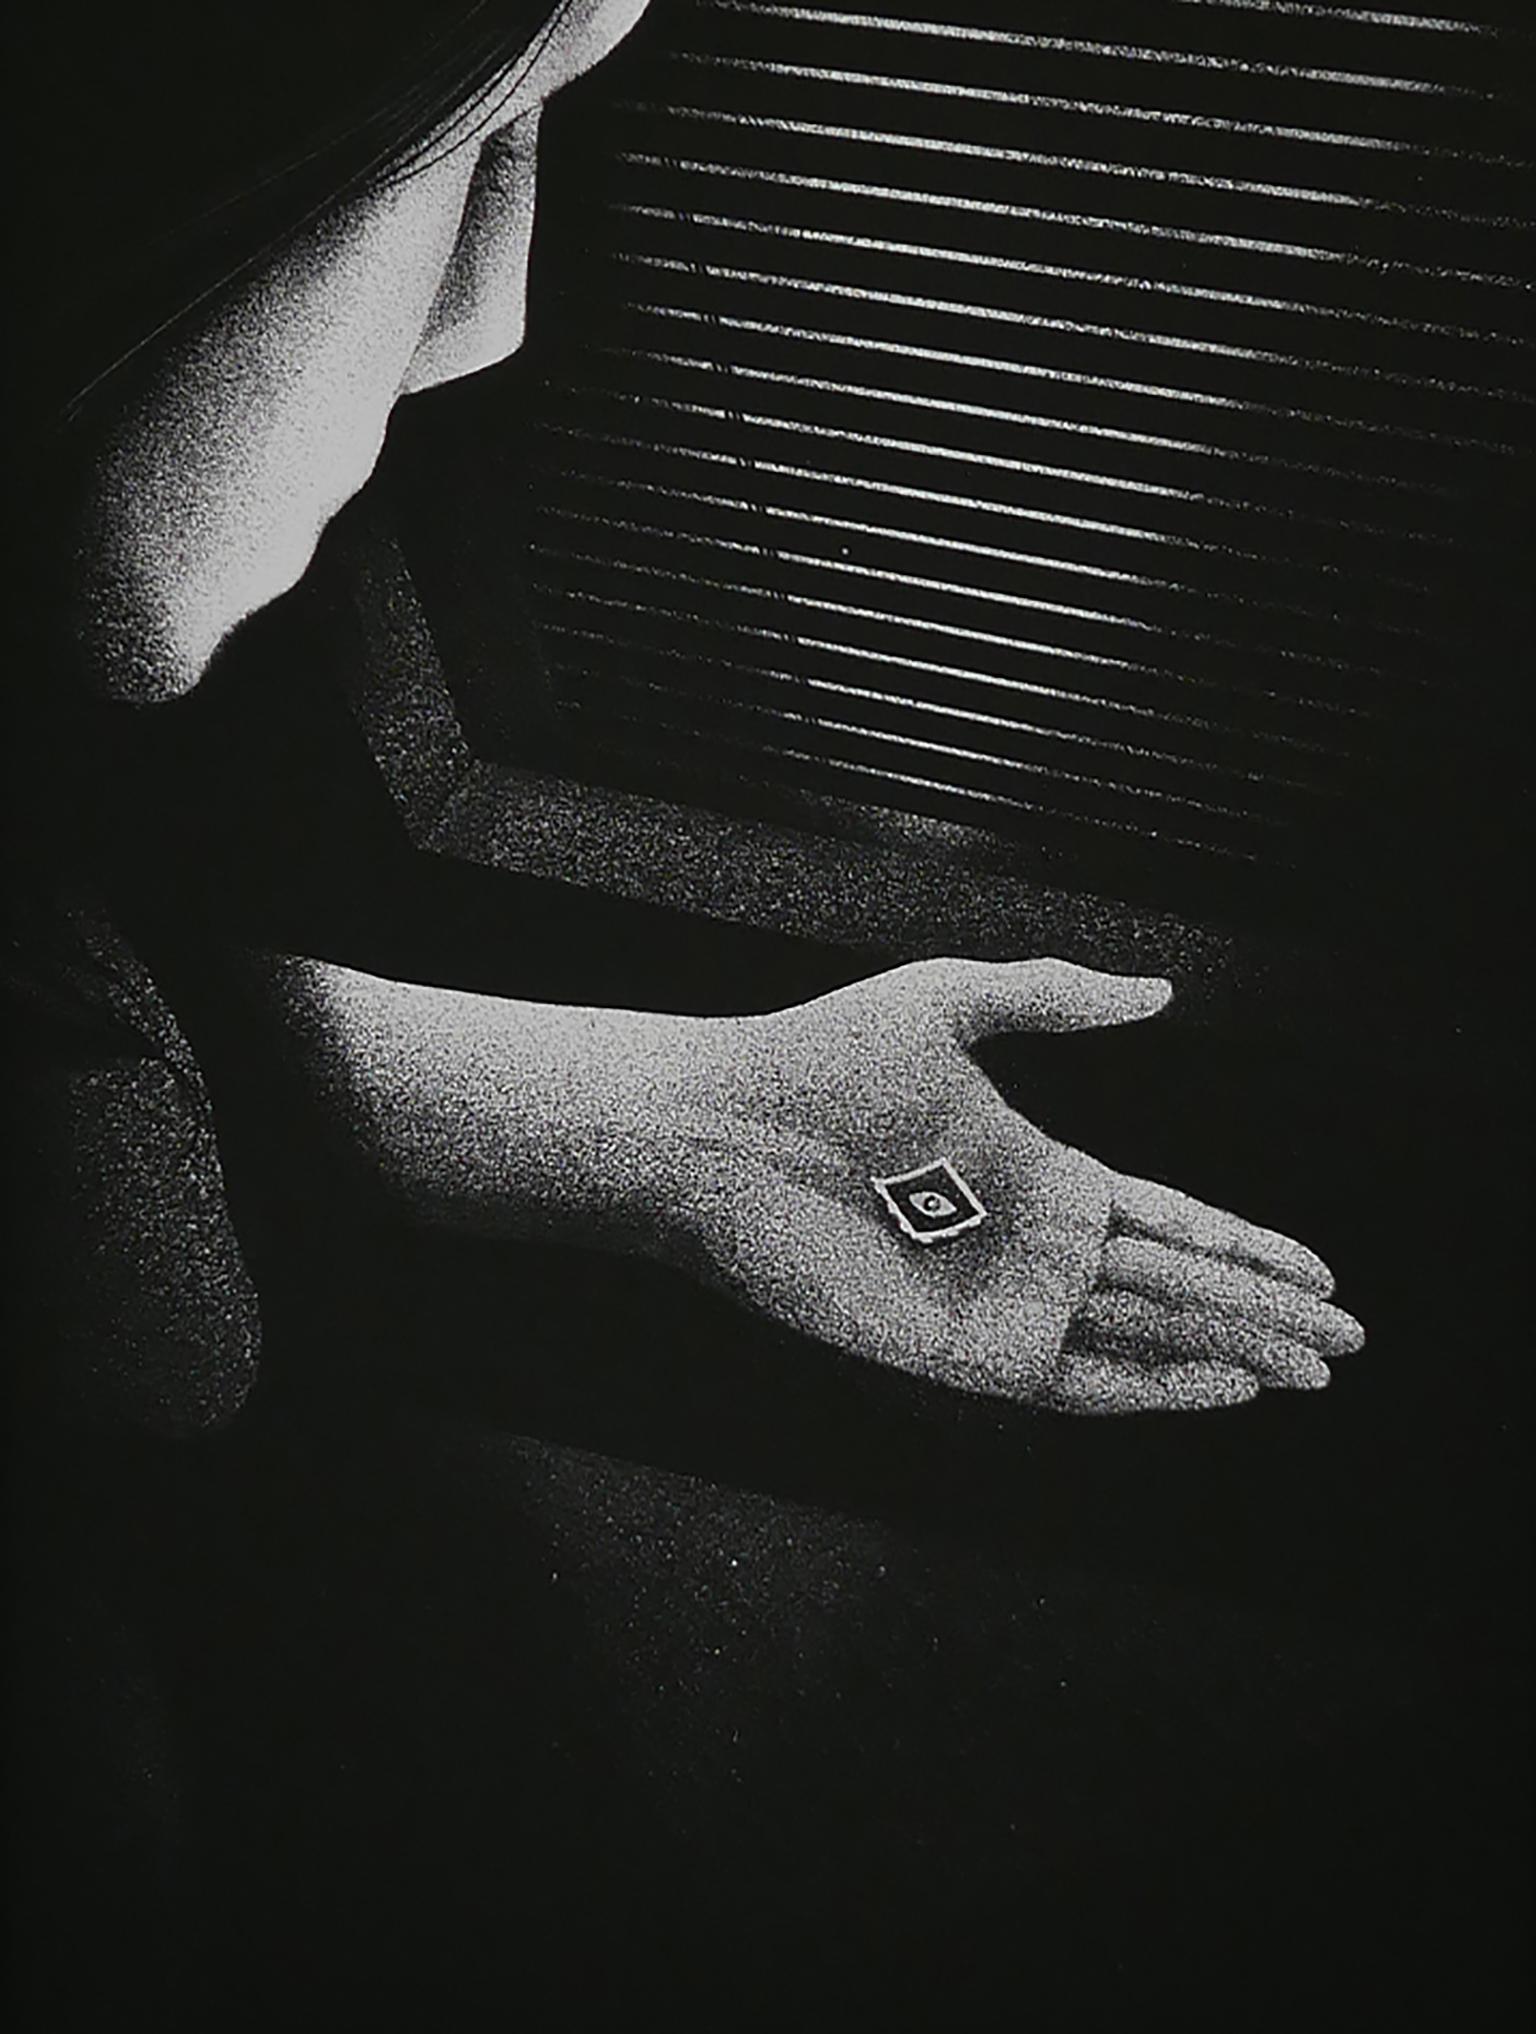 Daniel Stolle Figurative Print - Angst I - Illustration, digital, black and white, print, editorial, series